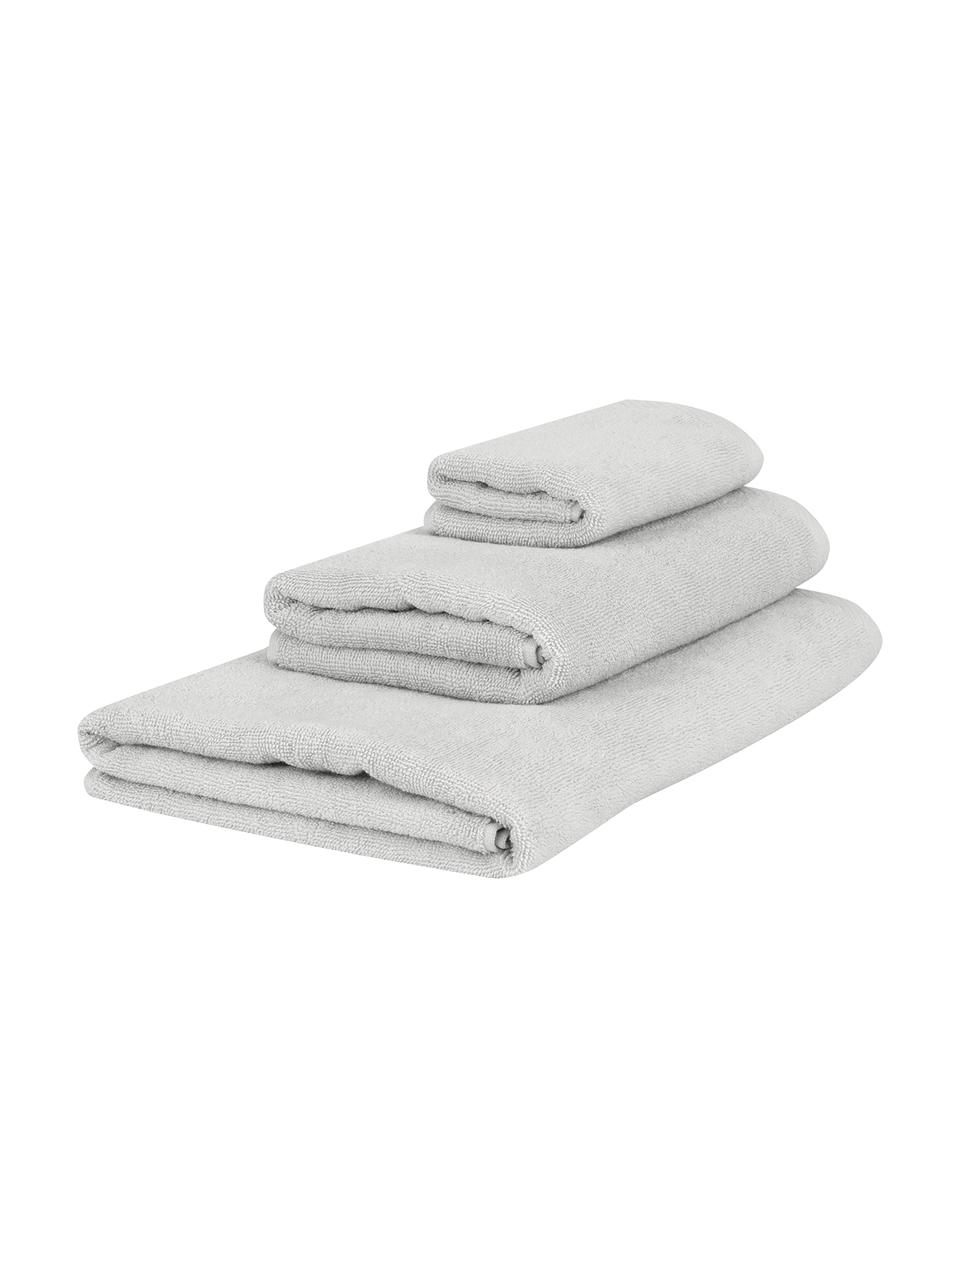 Set de toallas Comfort, 3 uds., Gris claro, Set de diferentes tamaños